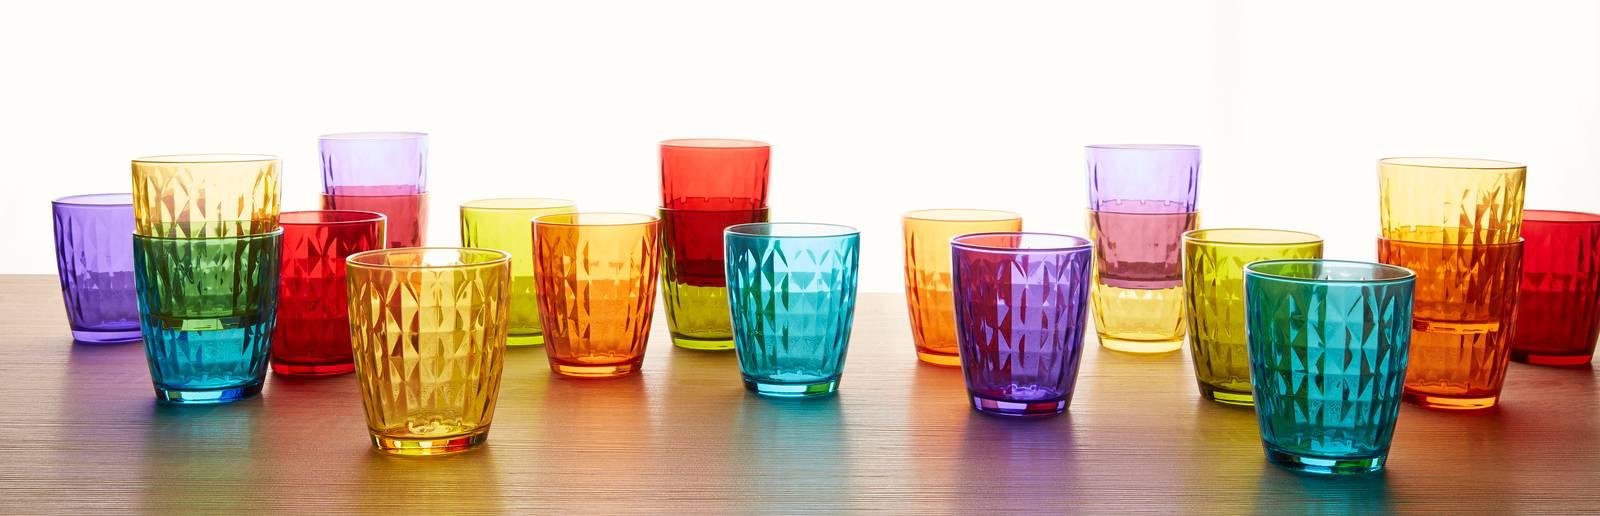 Bicchieri colorati fantasy in vetro